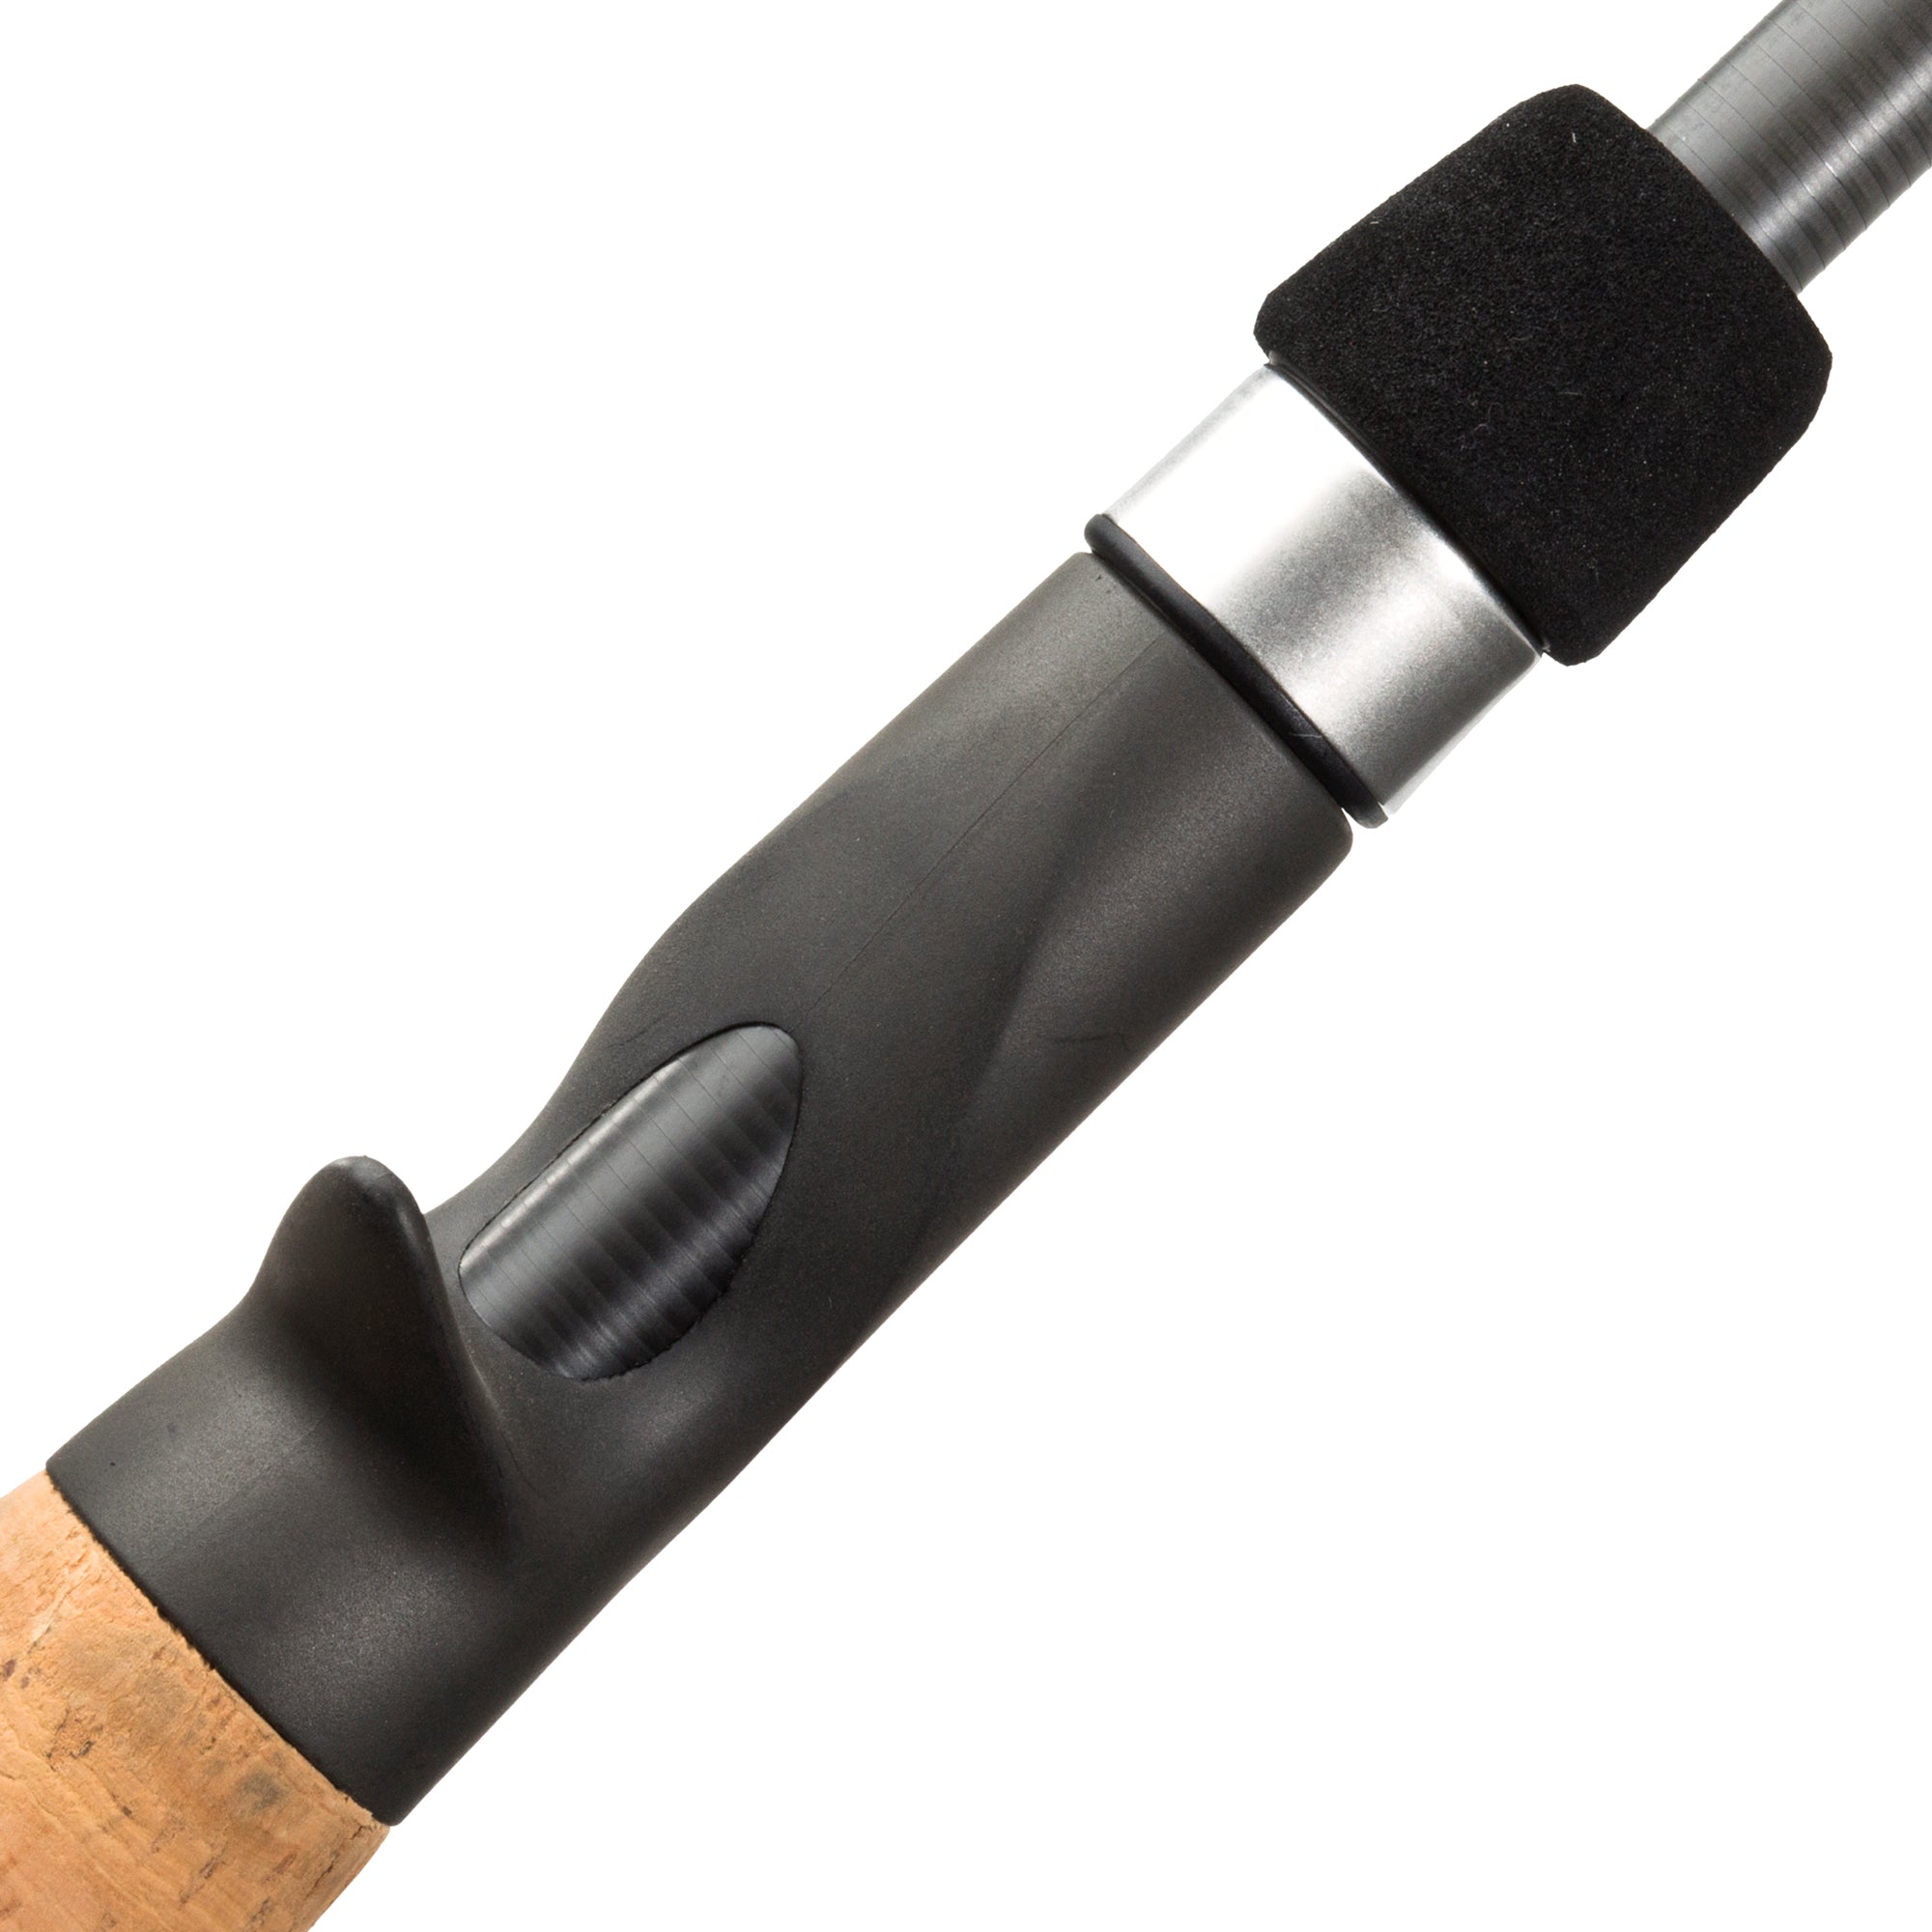 Kistler KLX Casting Fishing Rod 7'0 Medium (Slightly Used) 